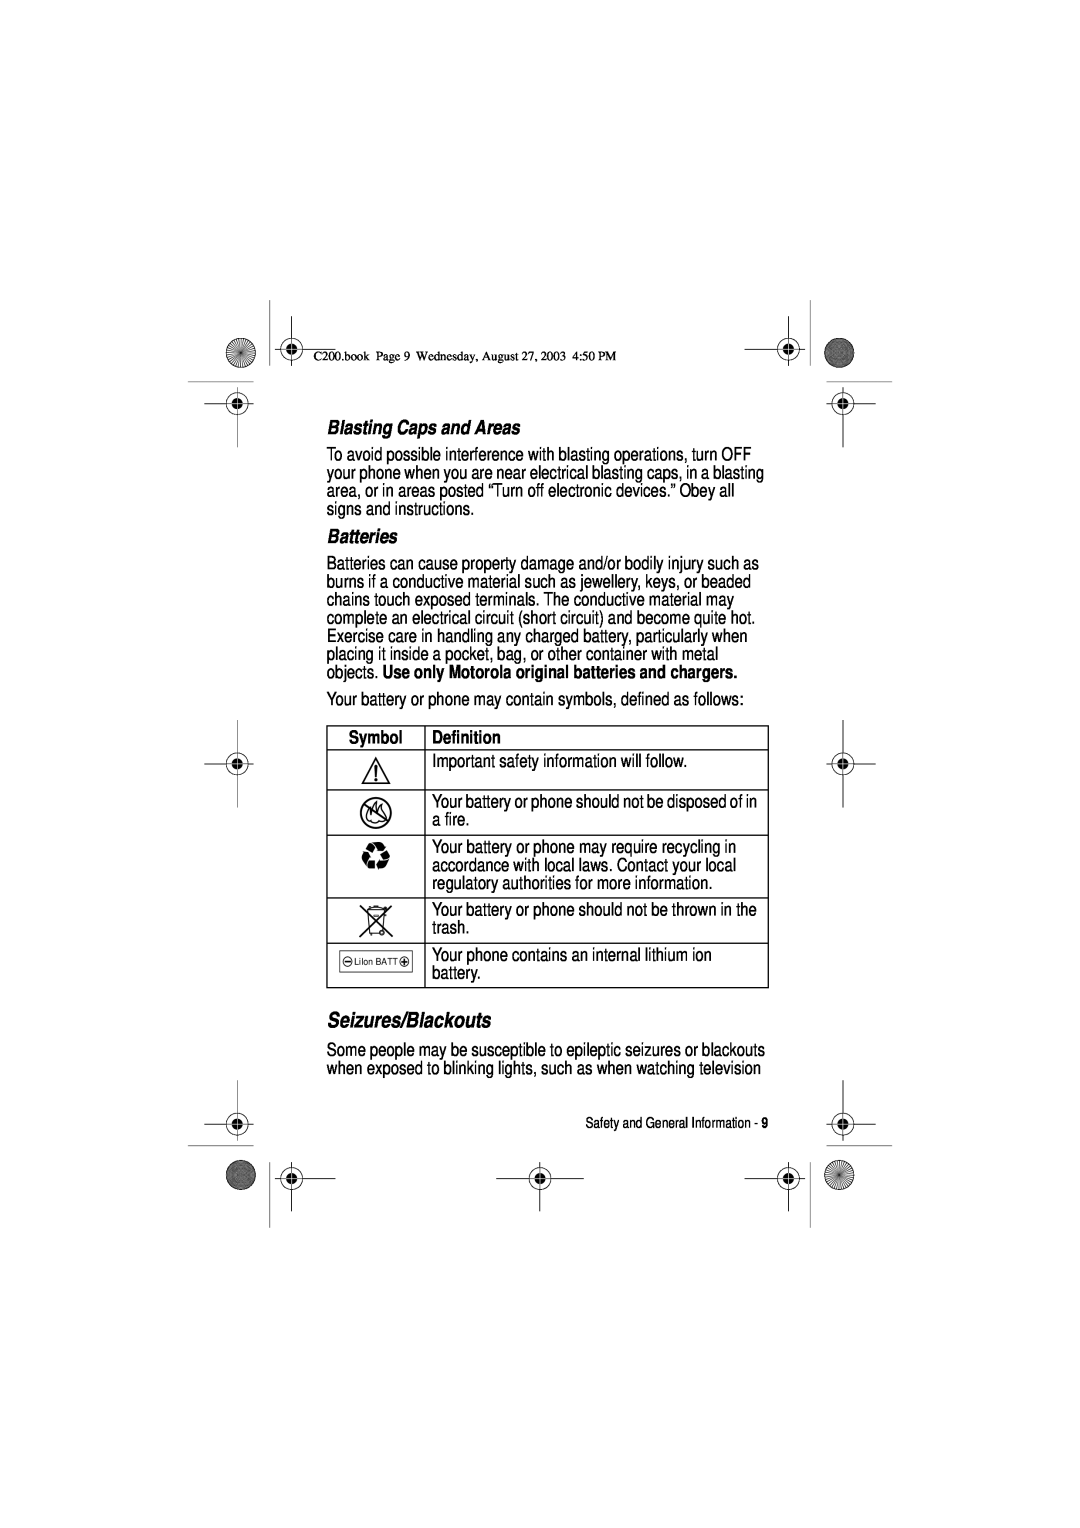 Motorola C200 manual Seizures/Blackouts, Blasting Caps and Areas, Batteries, Symbol, Definition 